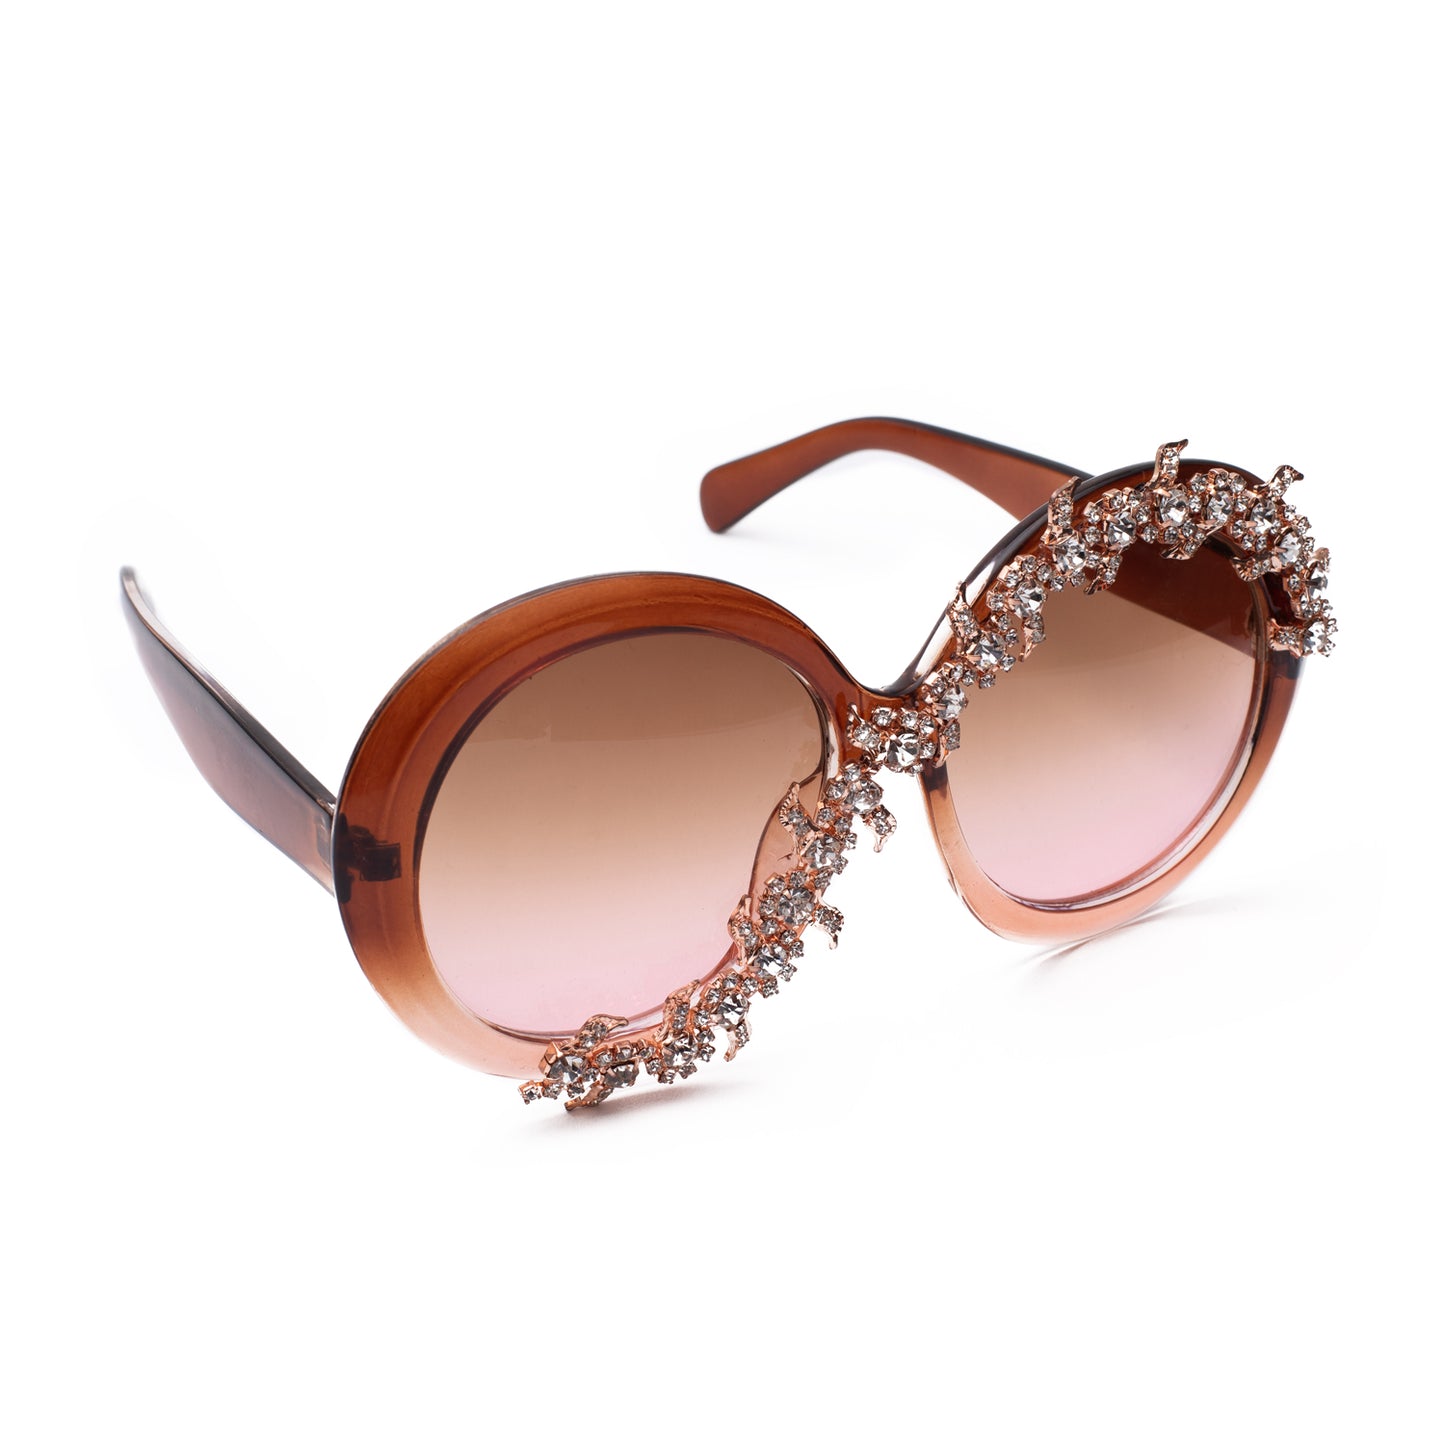 City of lights Champagne glitz SUNNIES + OPTICS Sunglasses Collection- NRODA